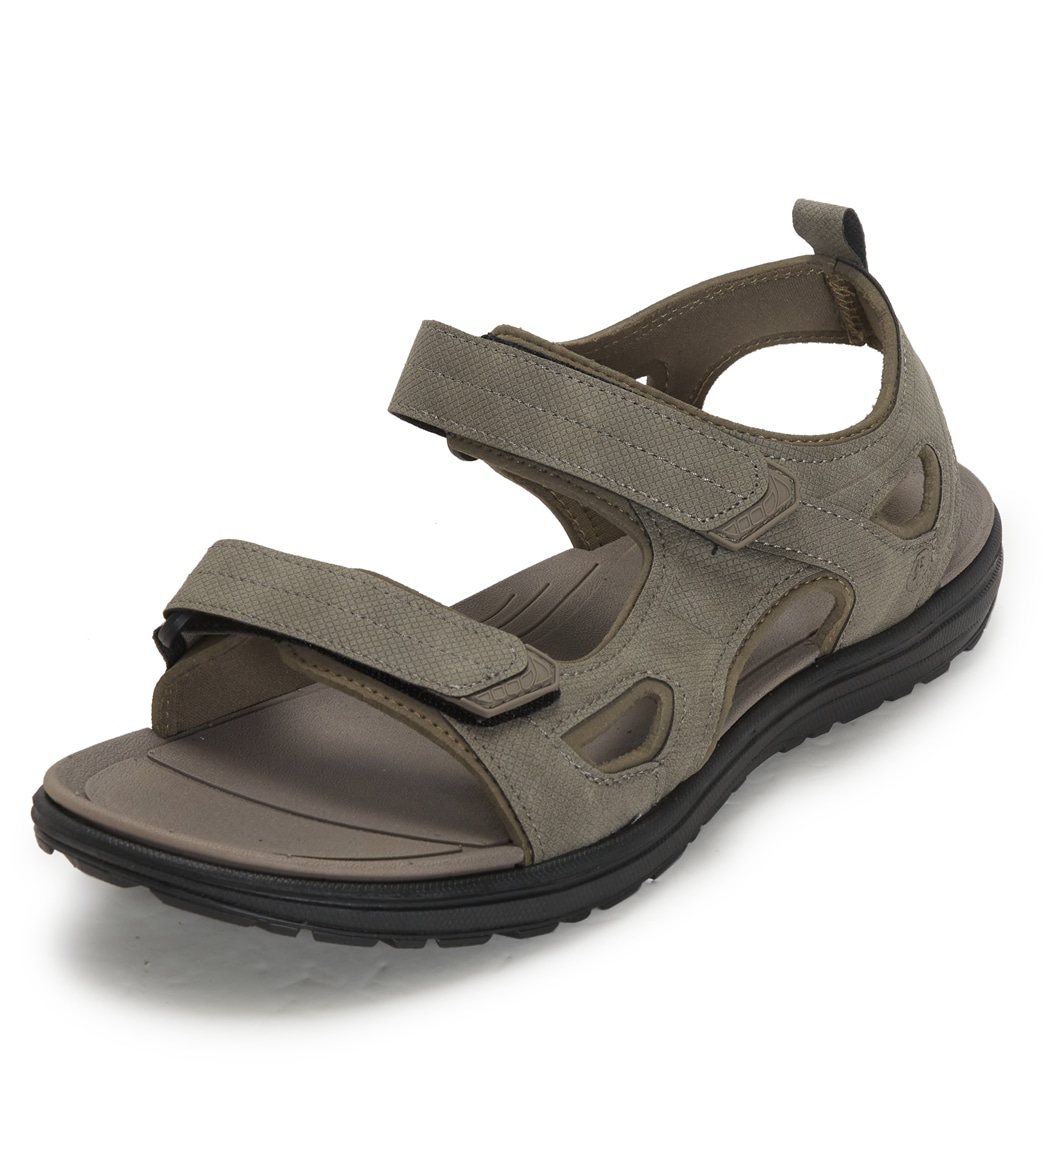 Northside Men's Riverside Lite Sport Sandals - Stone 080 - Swimoutlet.com